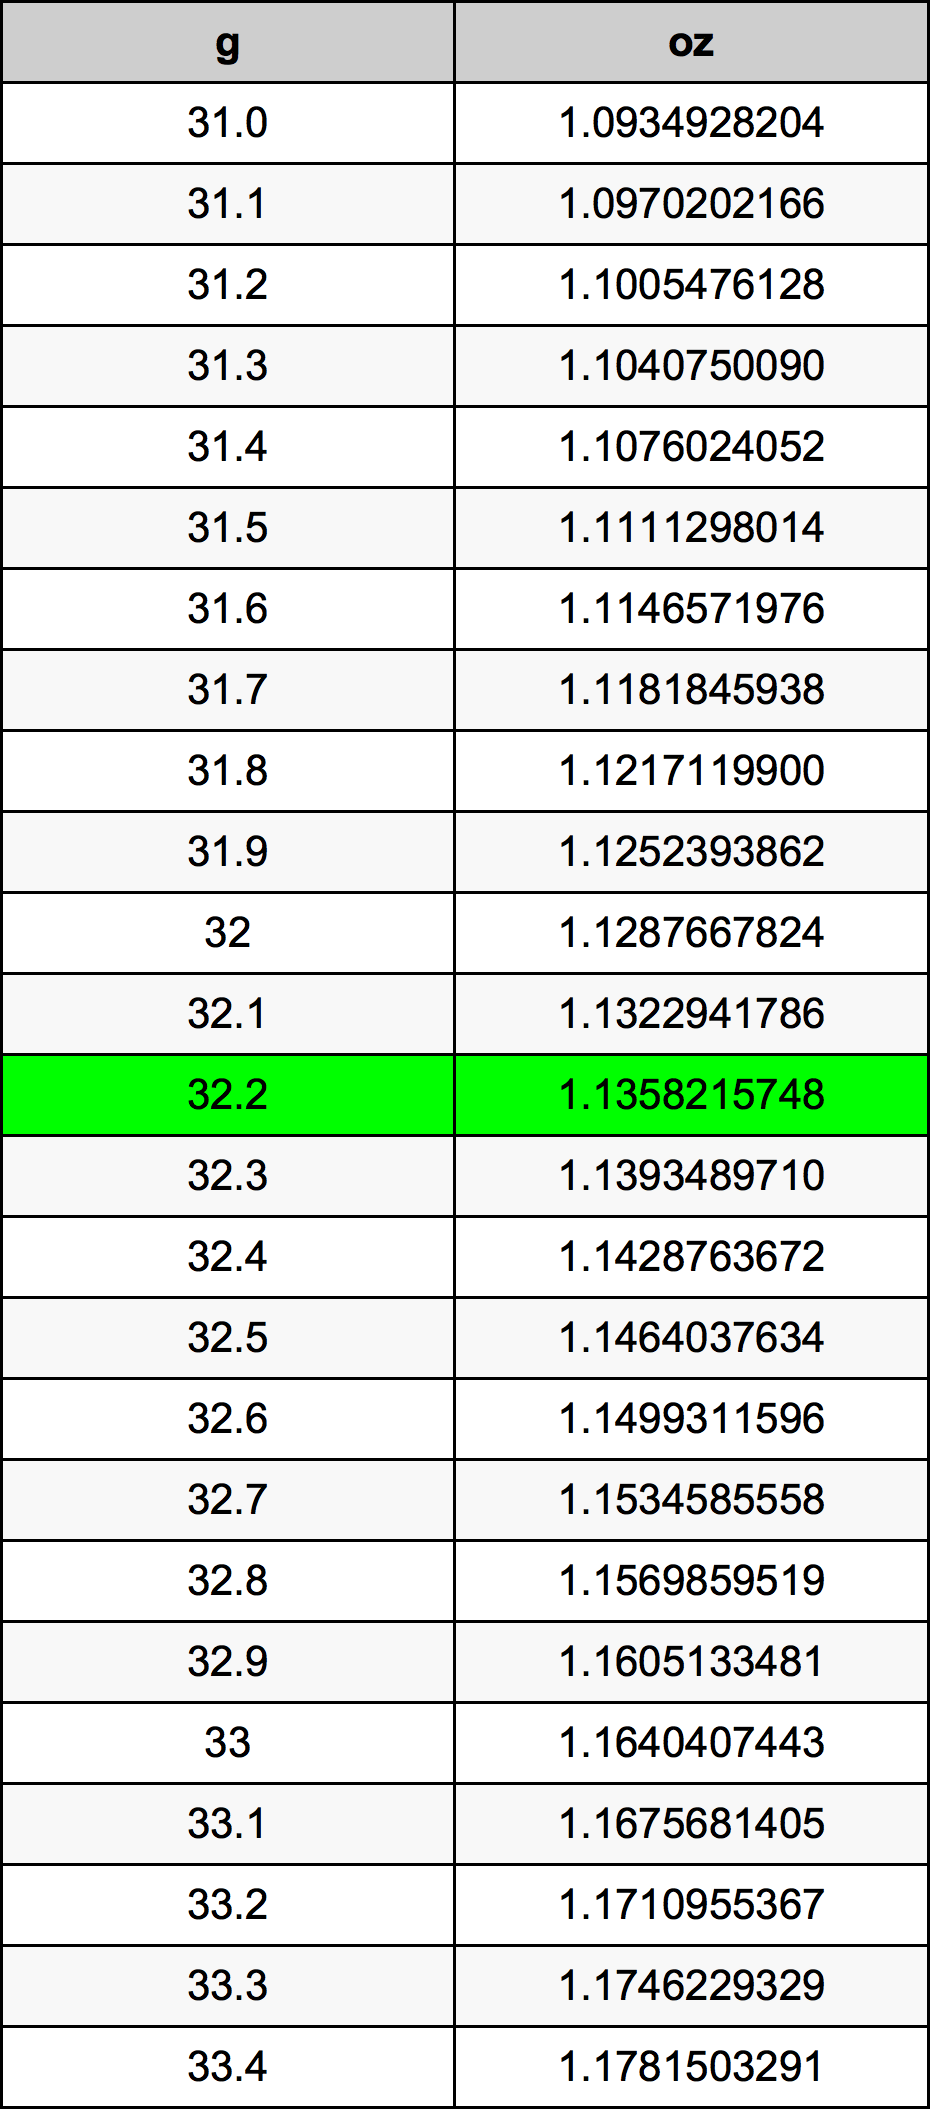 32.2 غرام جدول تحويل